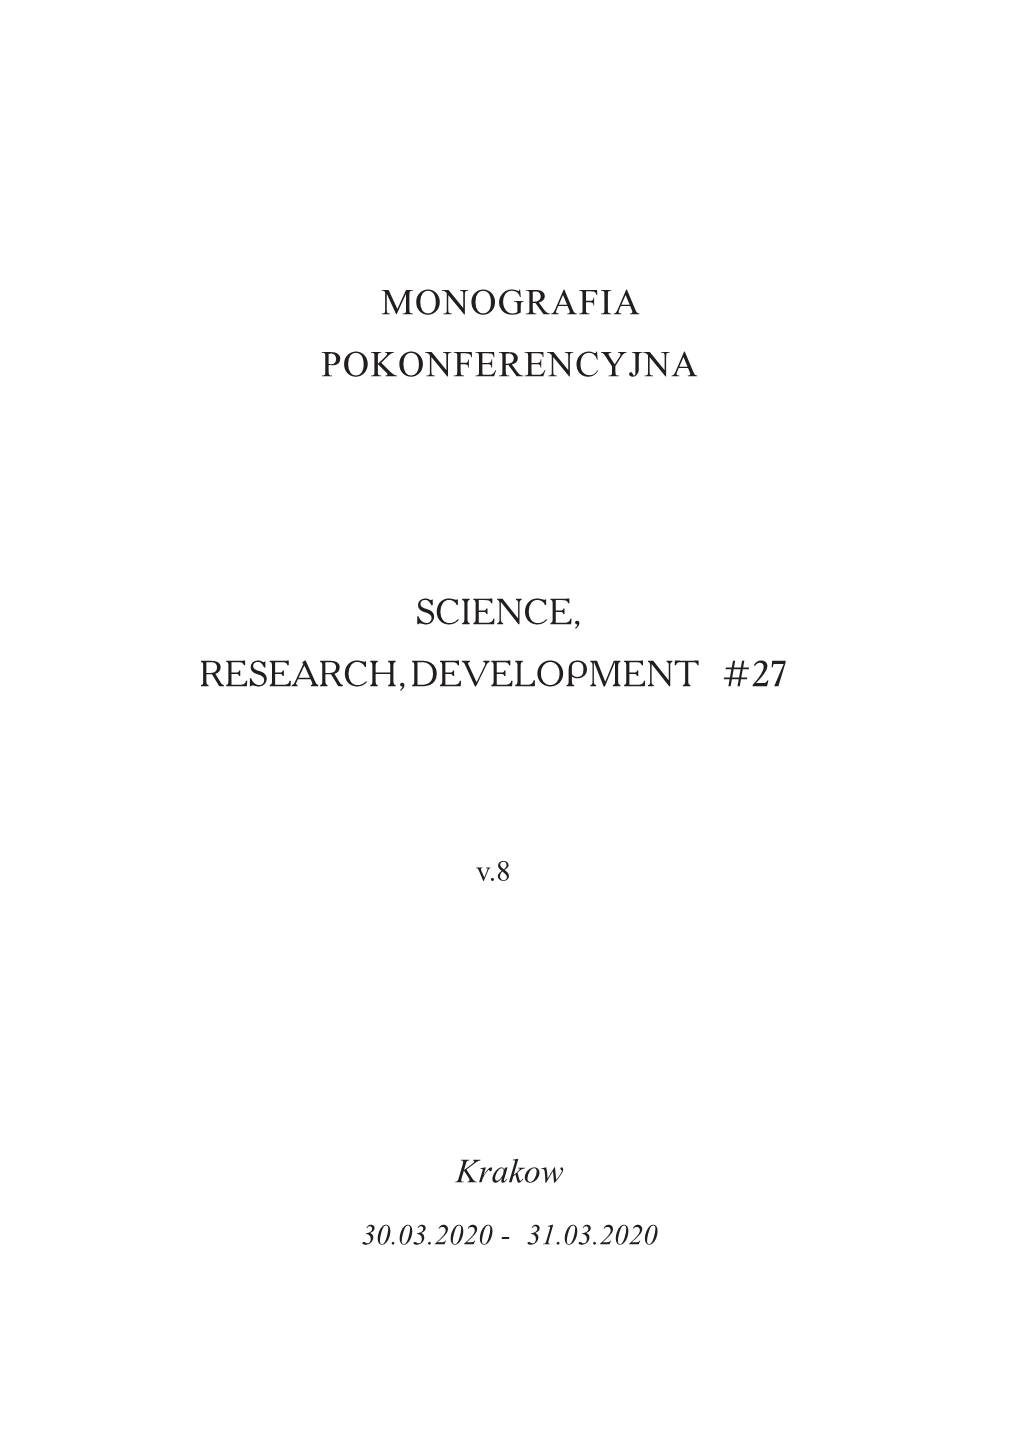 Monografia Pokonferencyjna Science, Research